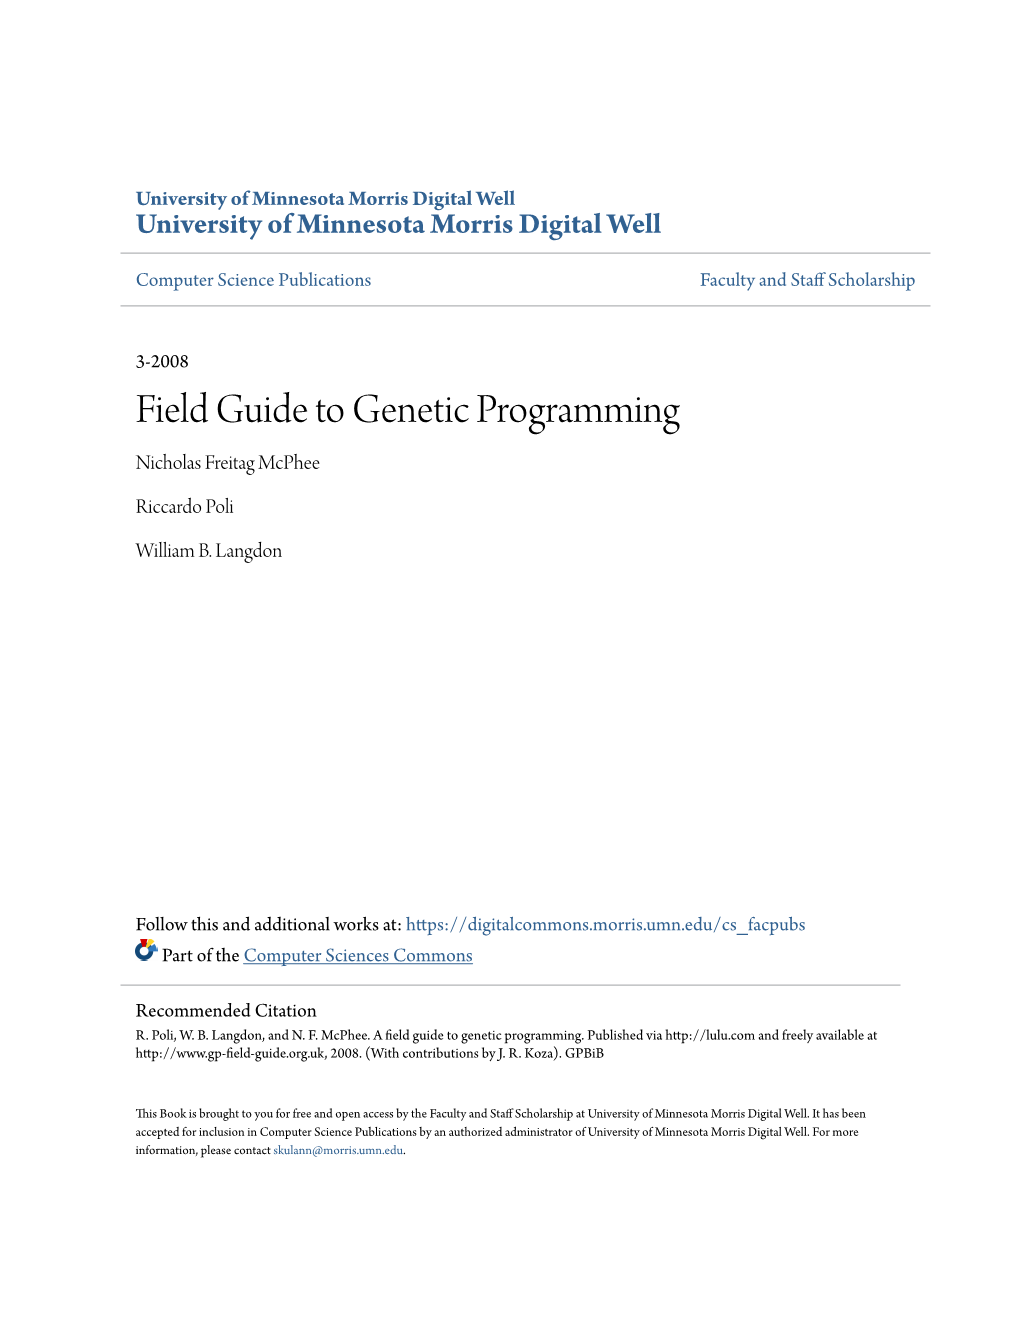 Field Guide to Genetic Programming Nicholas Freitag Mcphee